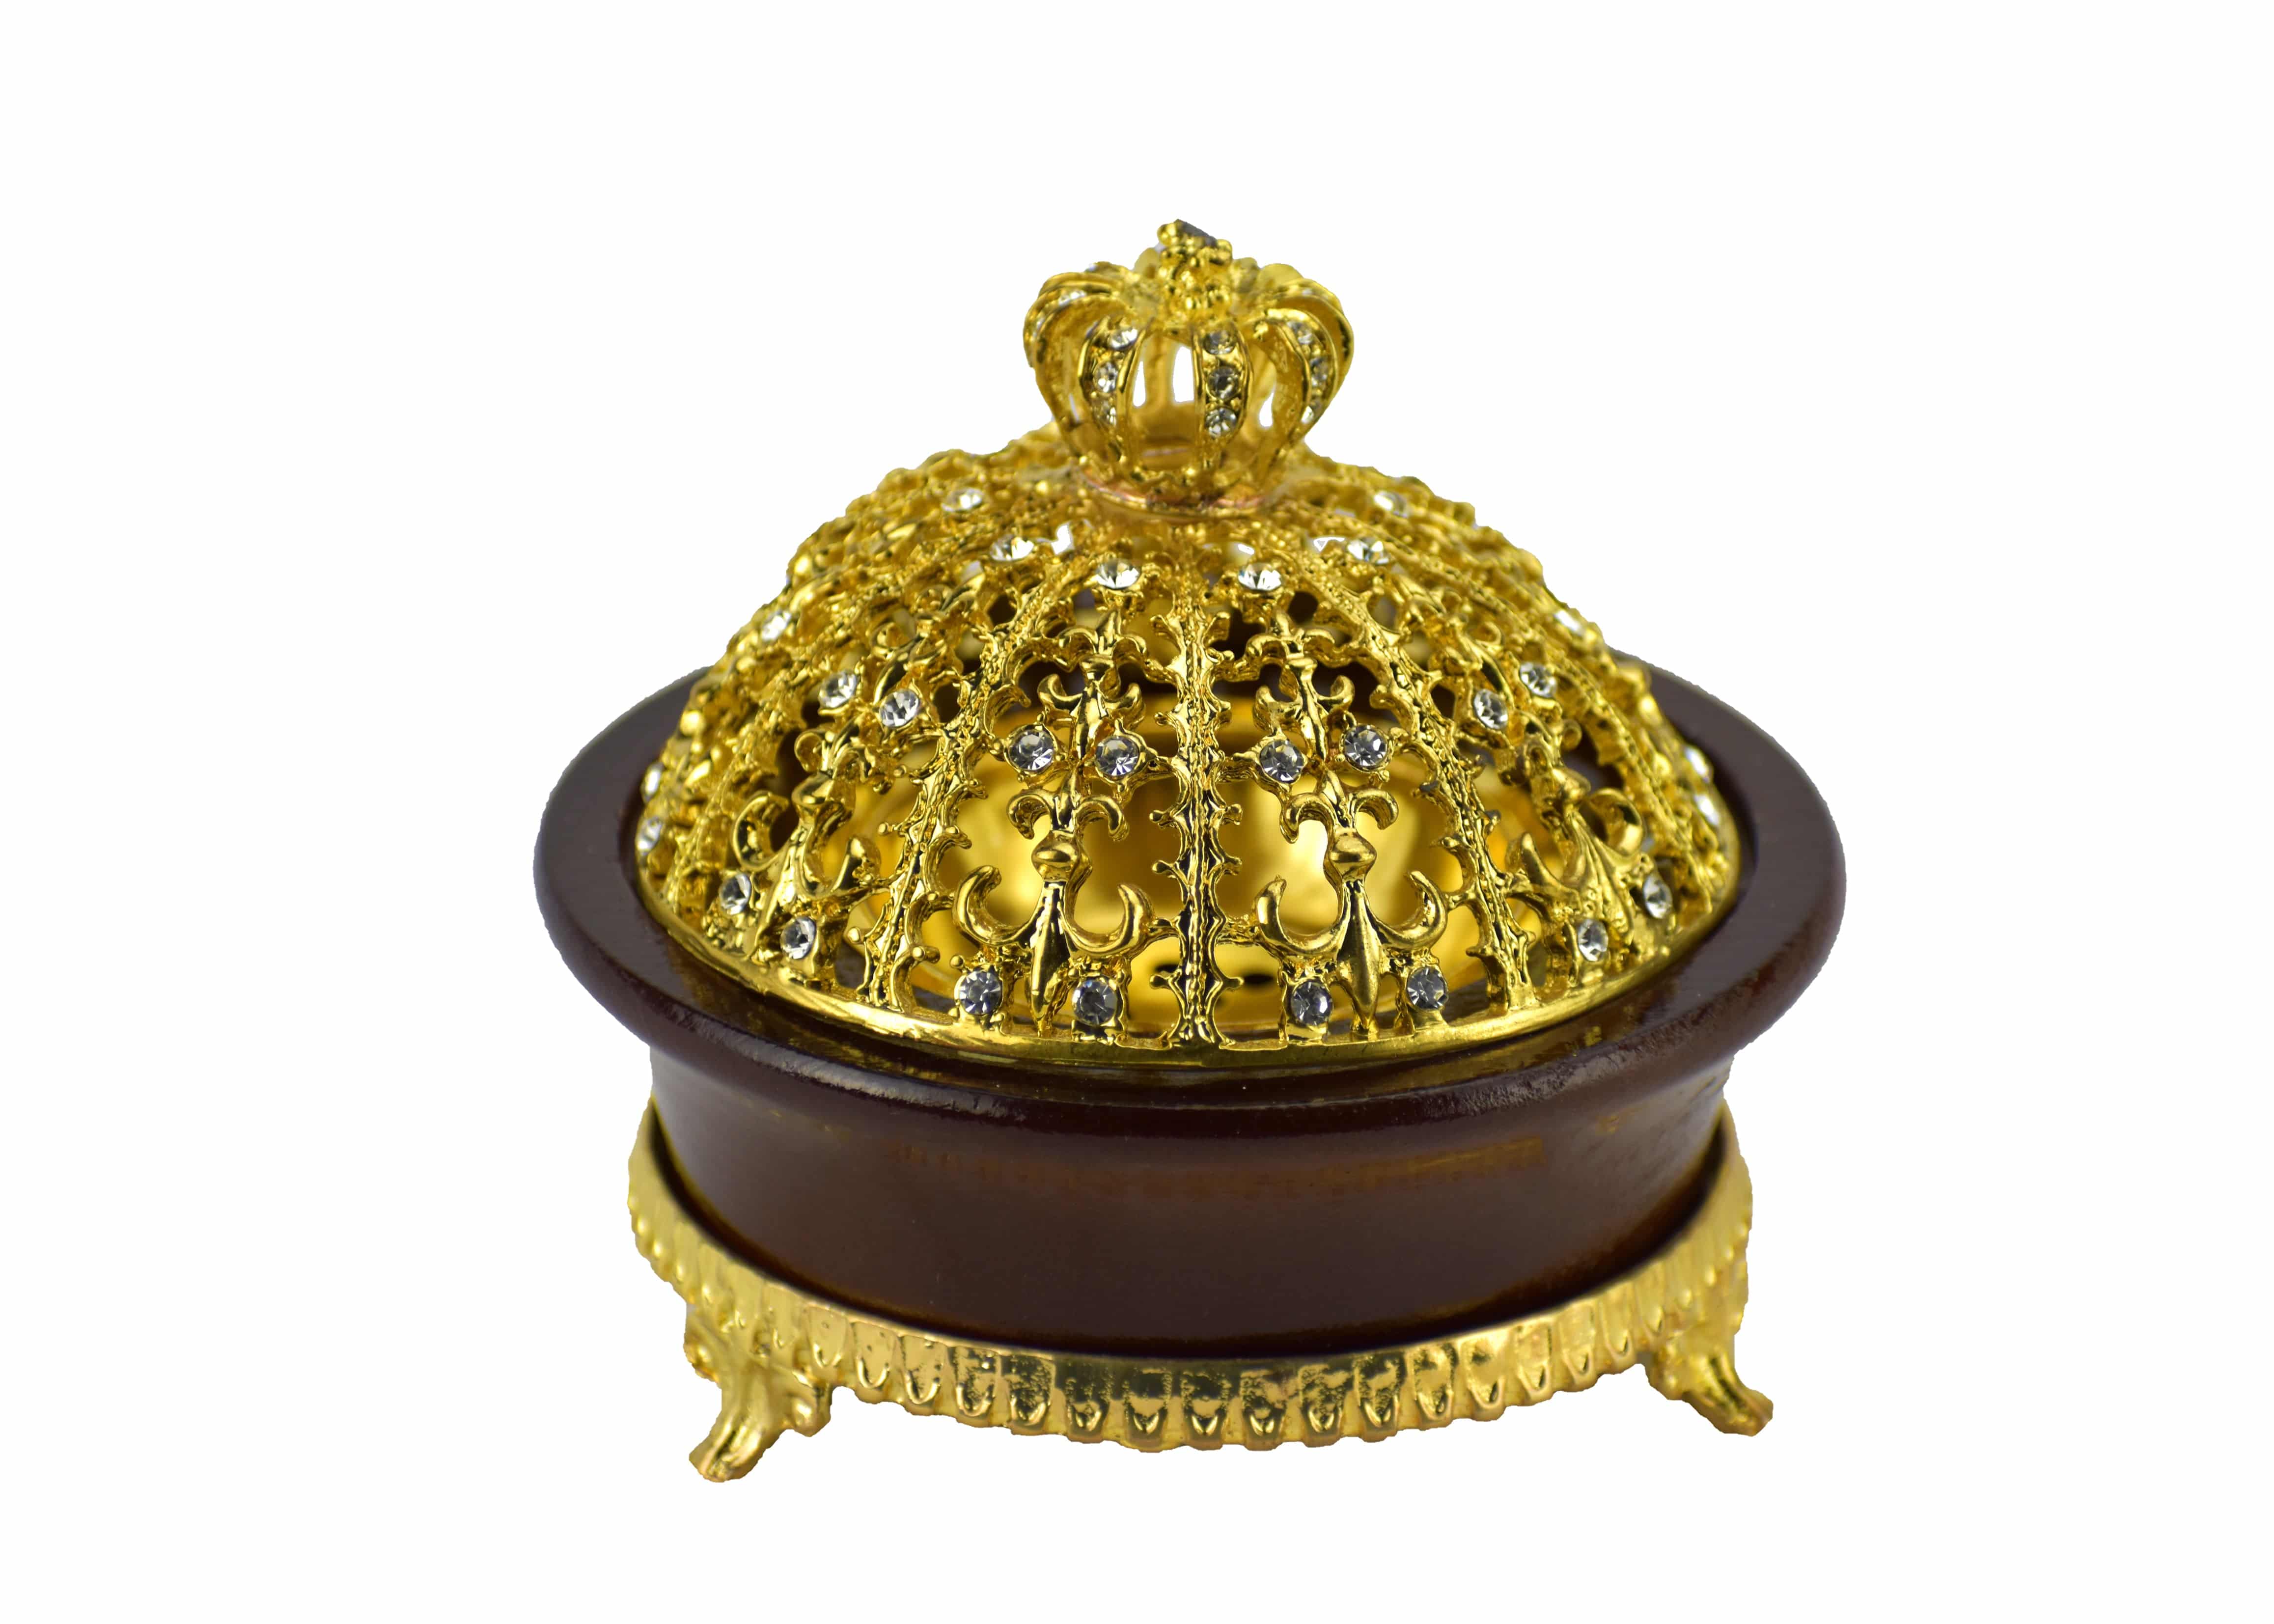 Jeweled Regal Crown Style Closed Incense Bakhoor Burner - Gold - Intense oud